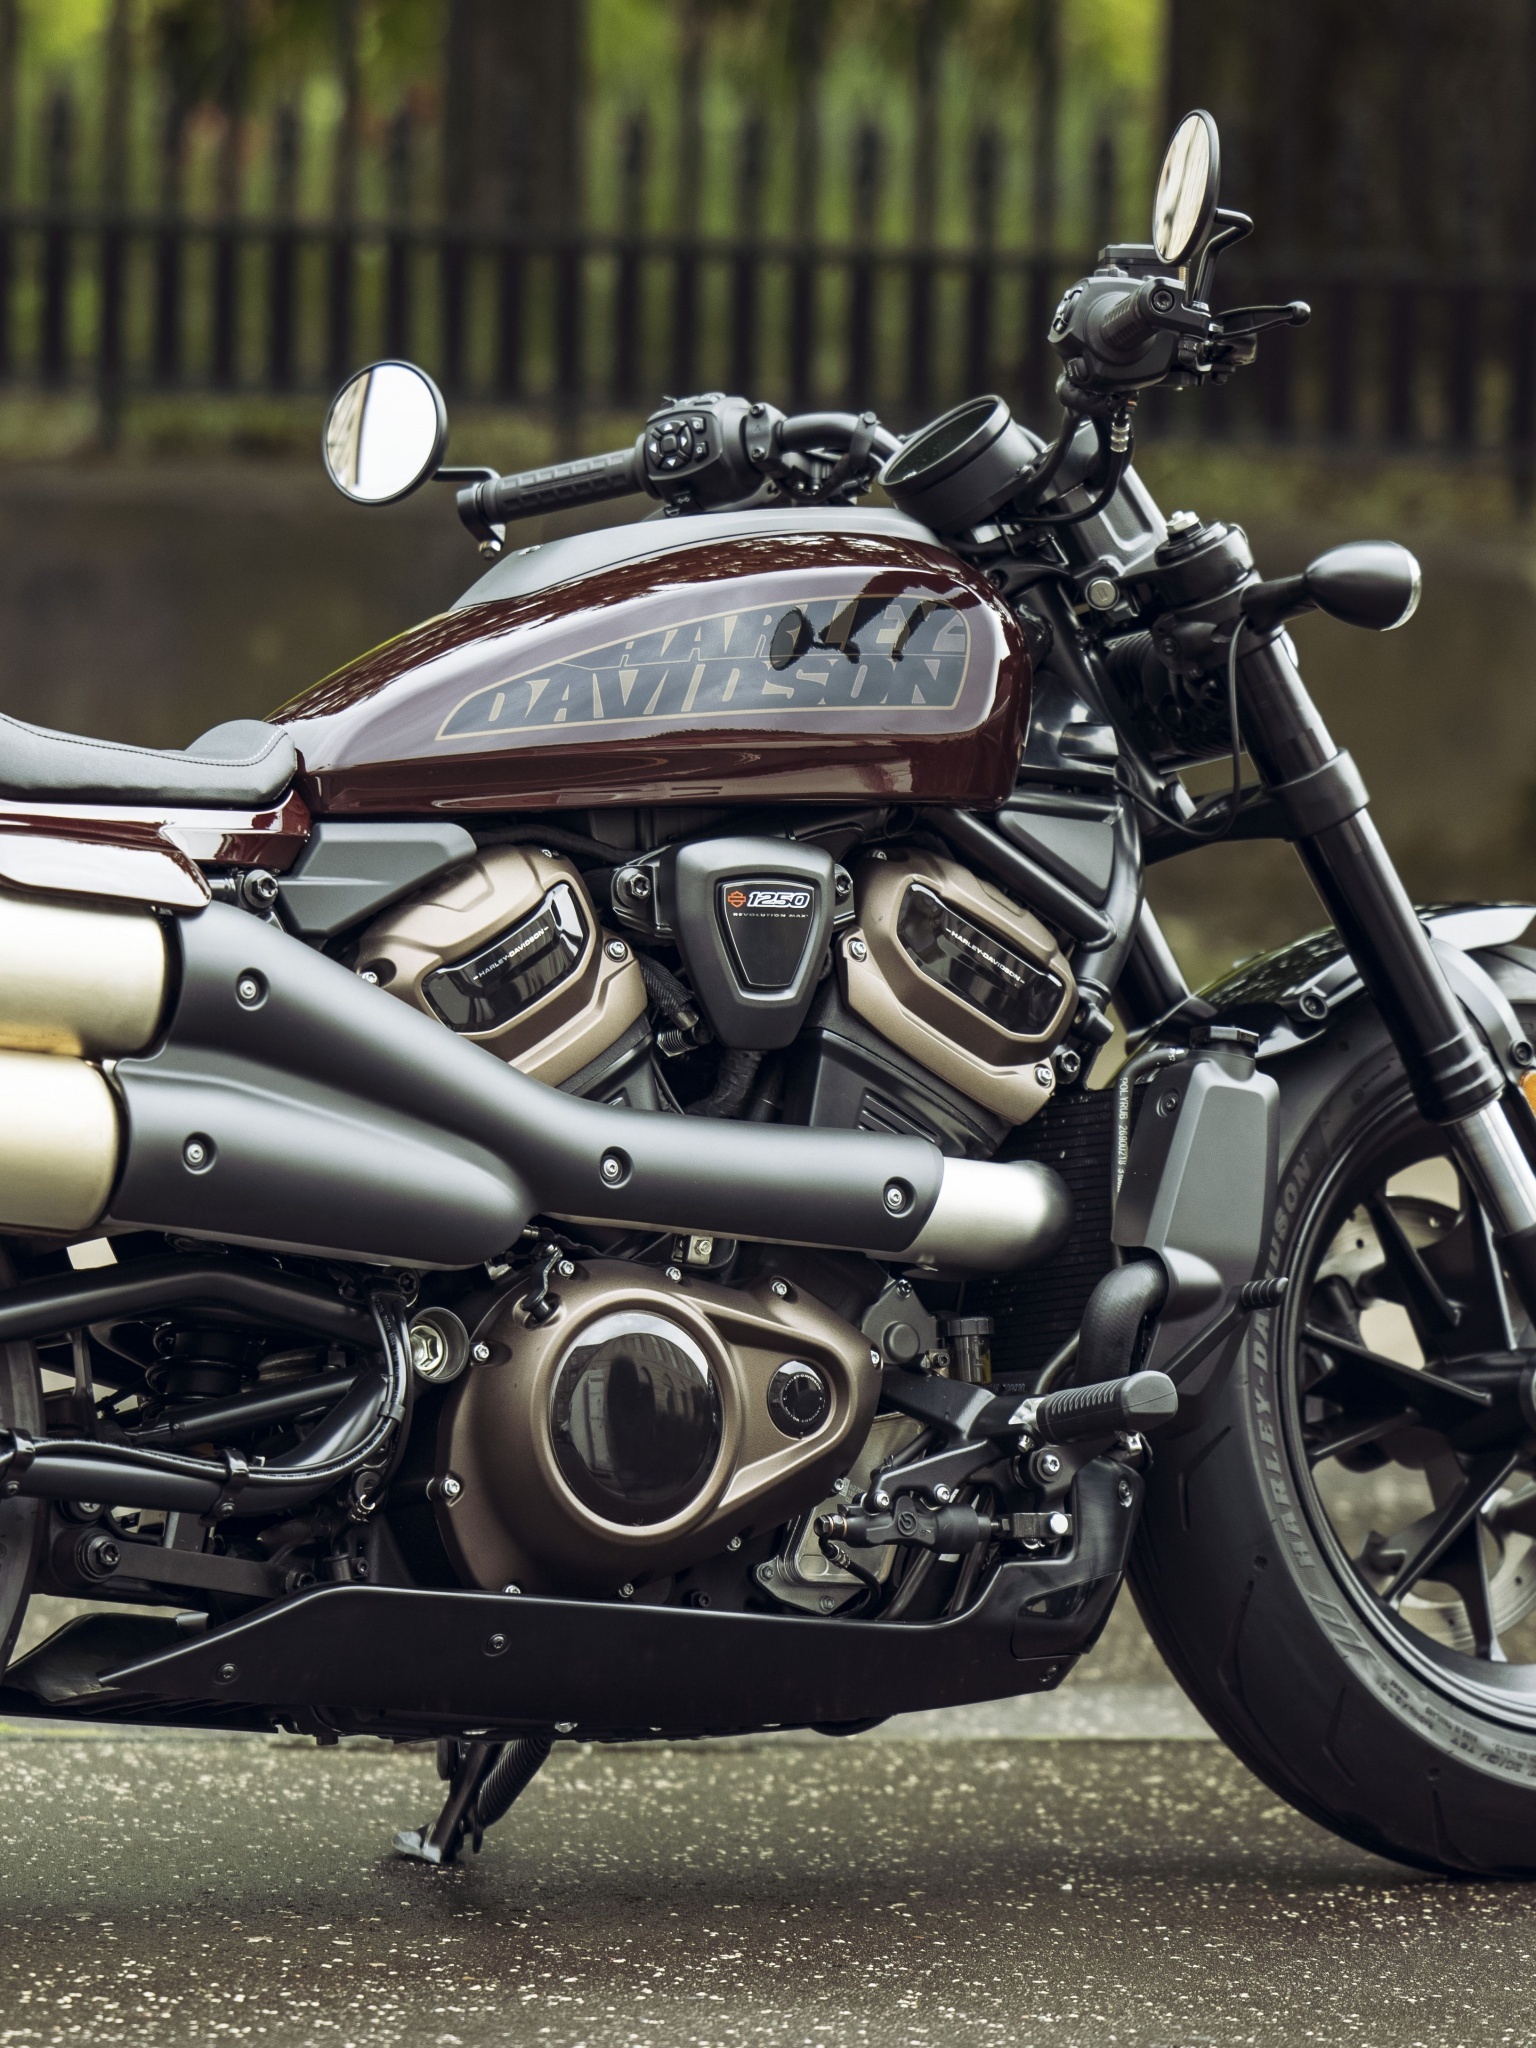 Harley-Davidson Sportster S, Cruiser motorcycle, 2021 model, Powerful bike, 1540x2050 HD Handy